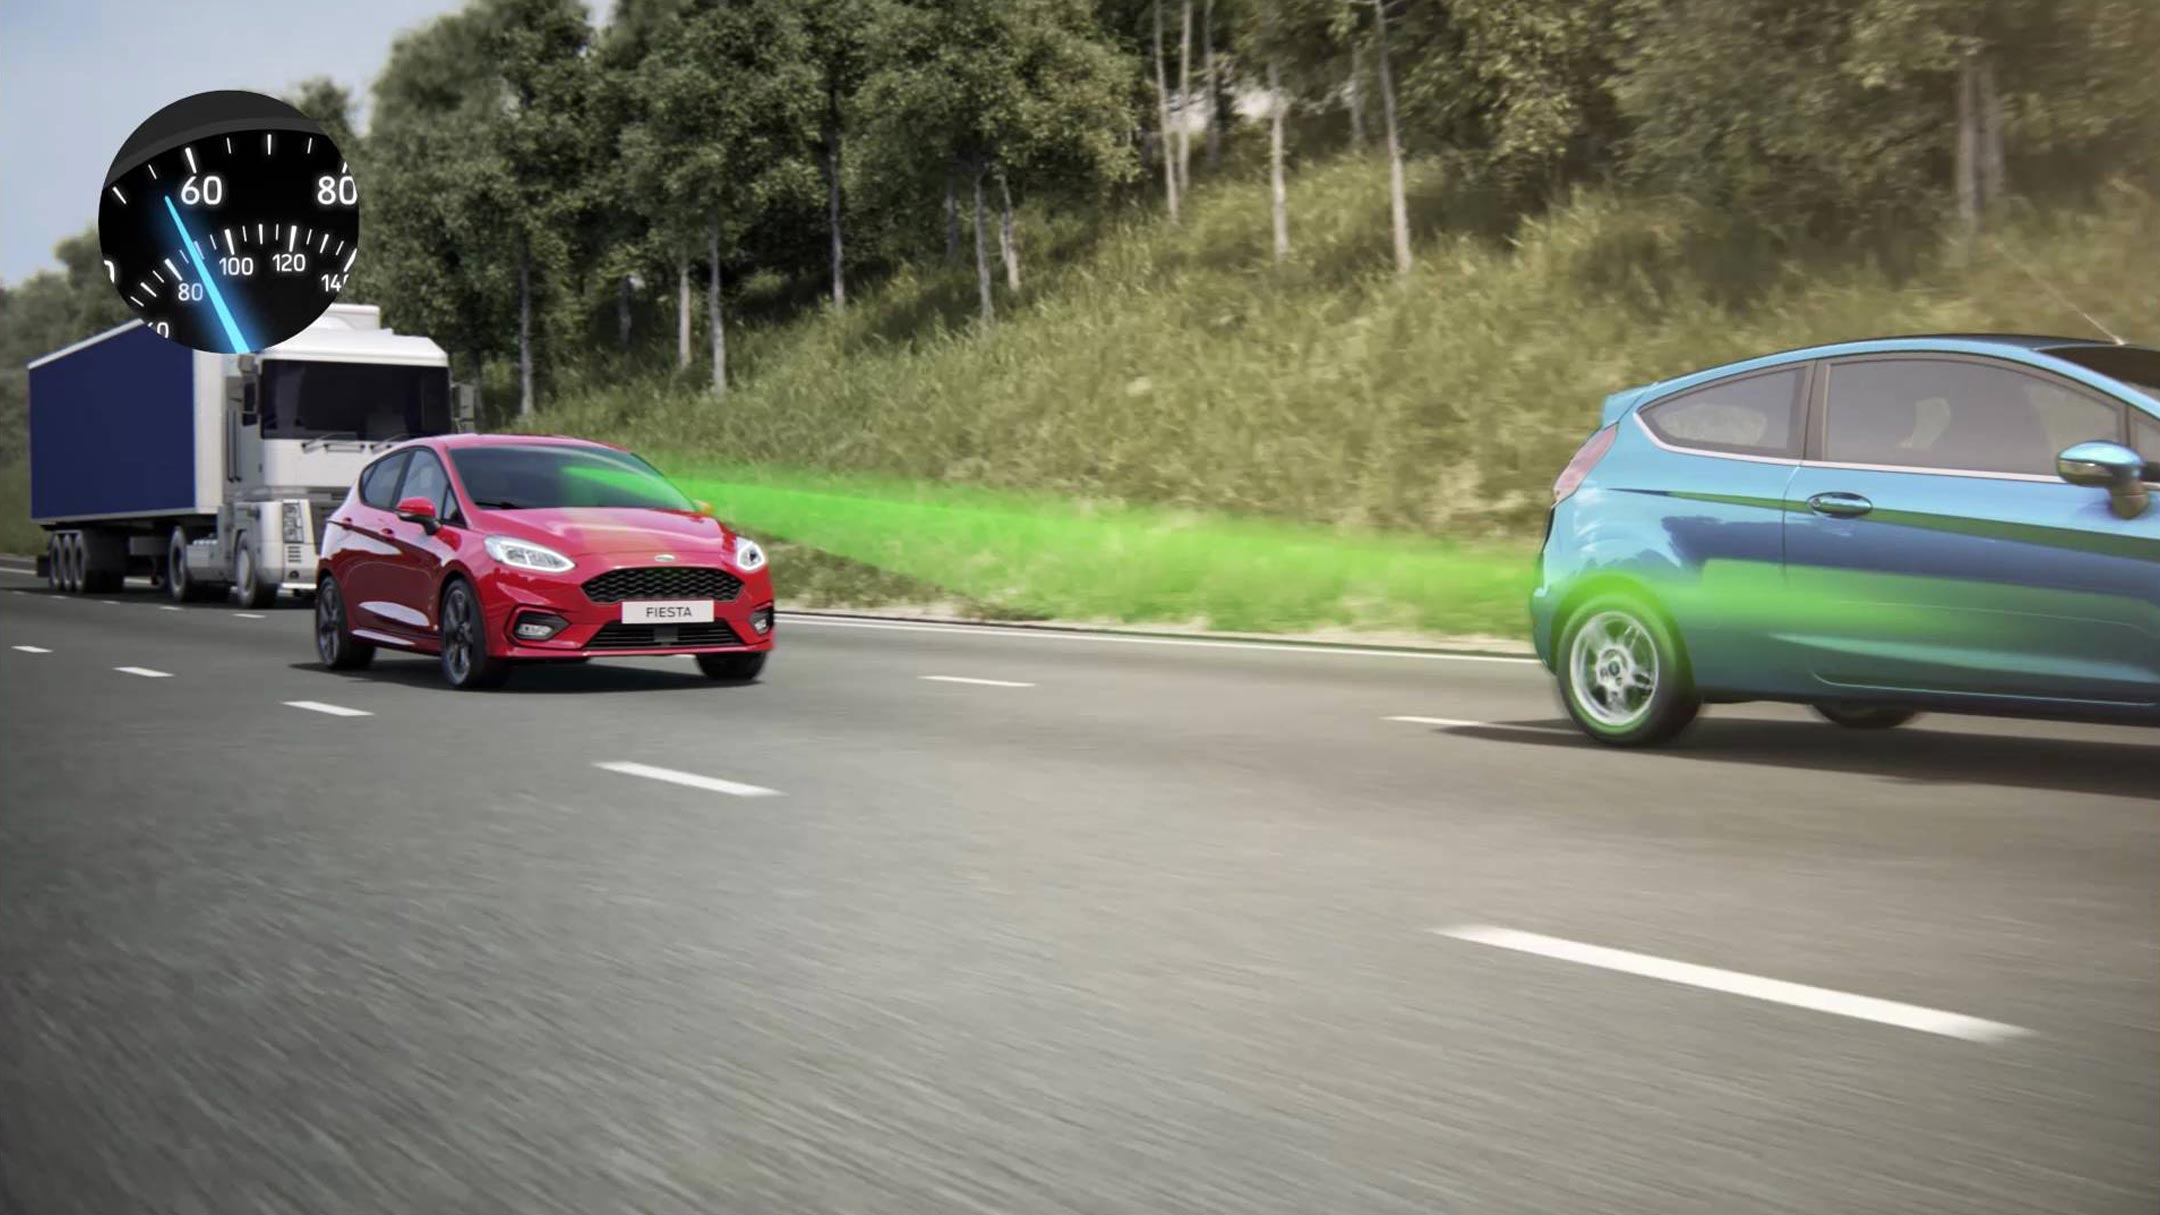 Ford Fiesta using Adaptive cruise control